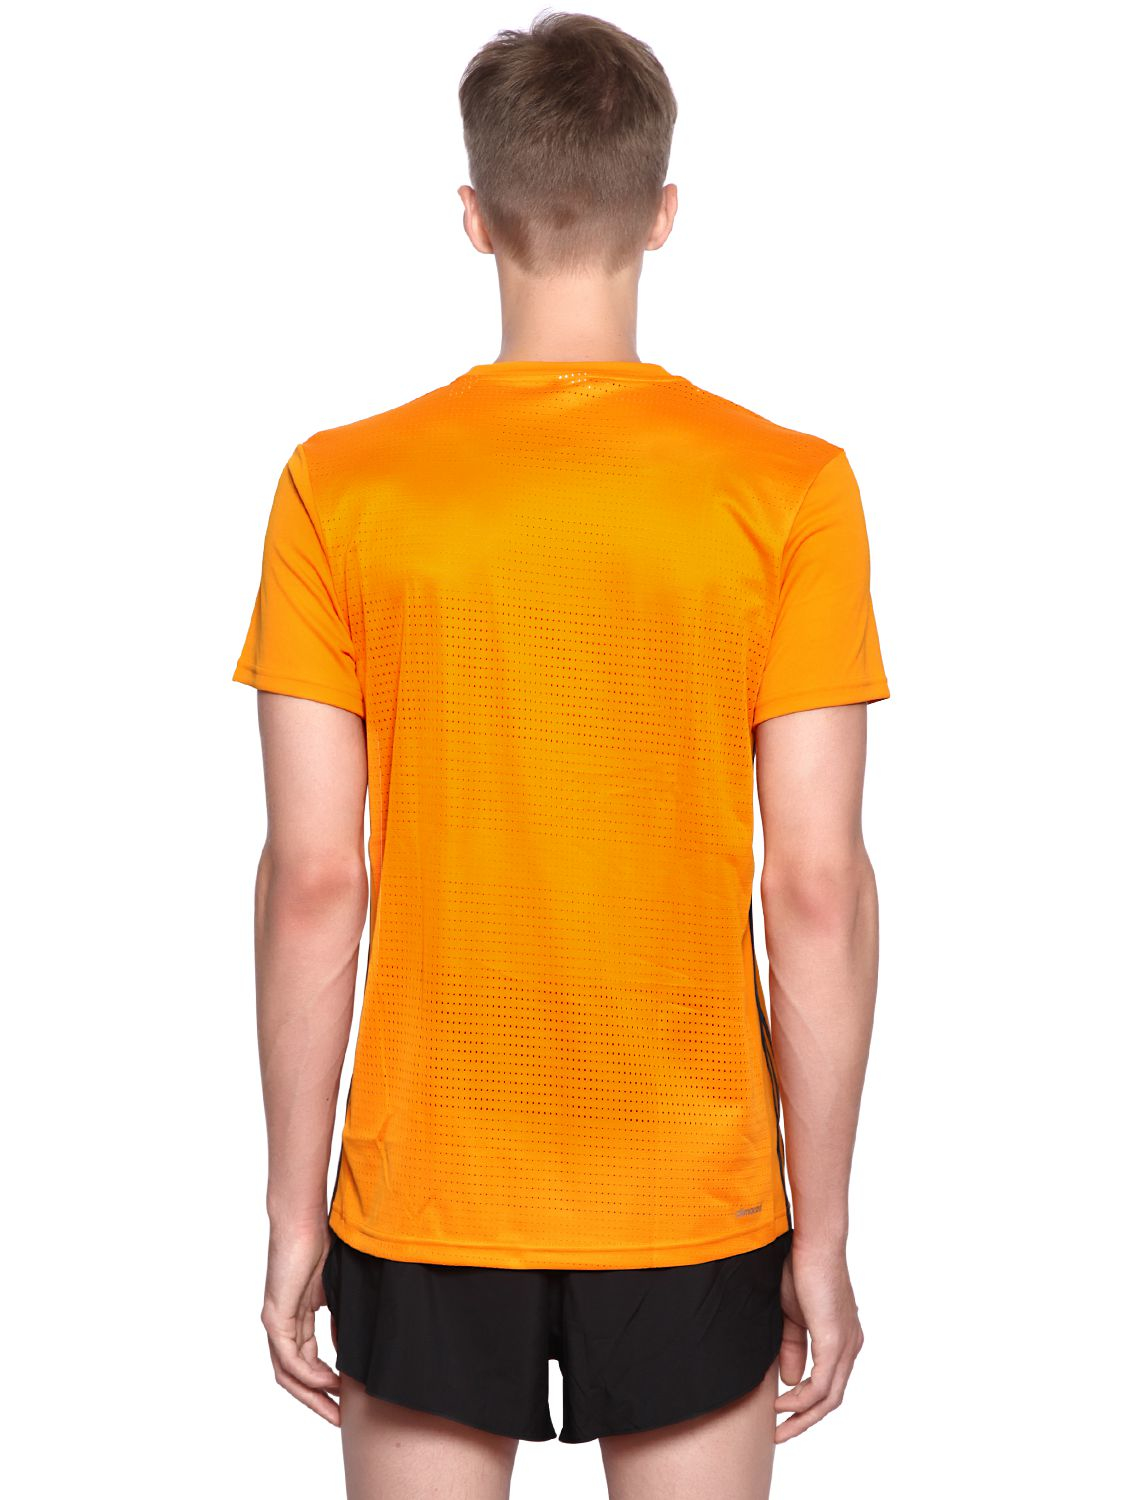 Lyst - Adidas Originals Perforated Nylon Running T-shirt in Orange for Men